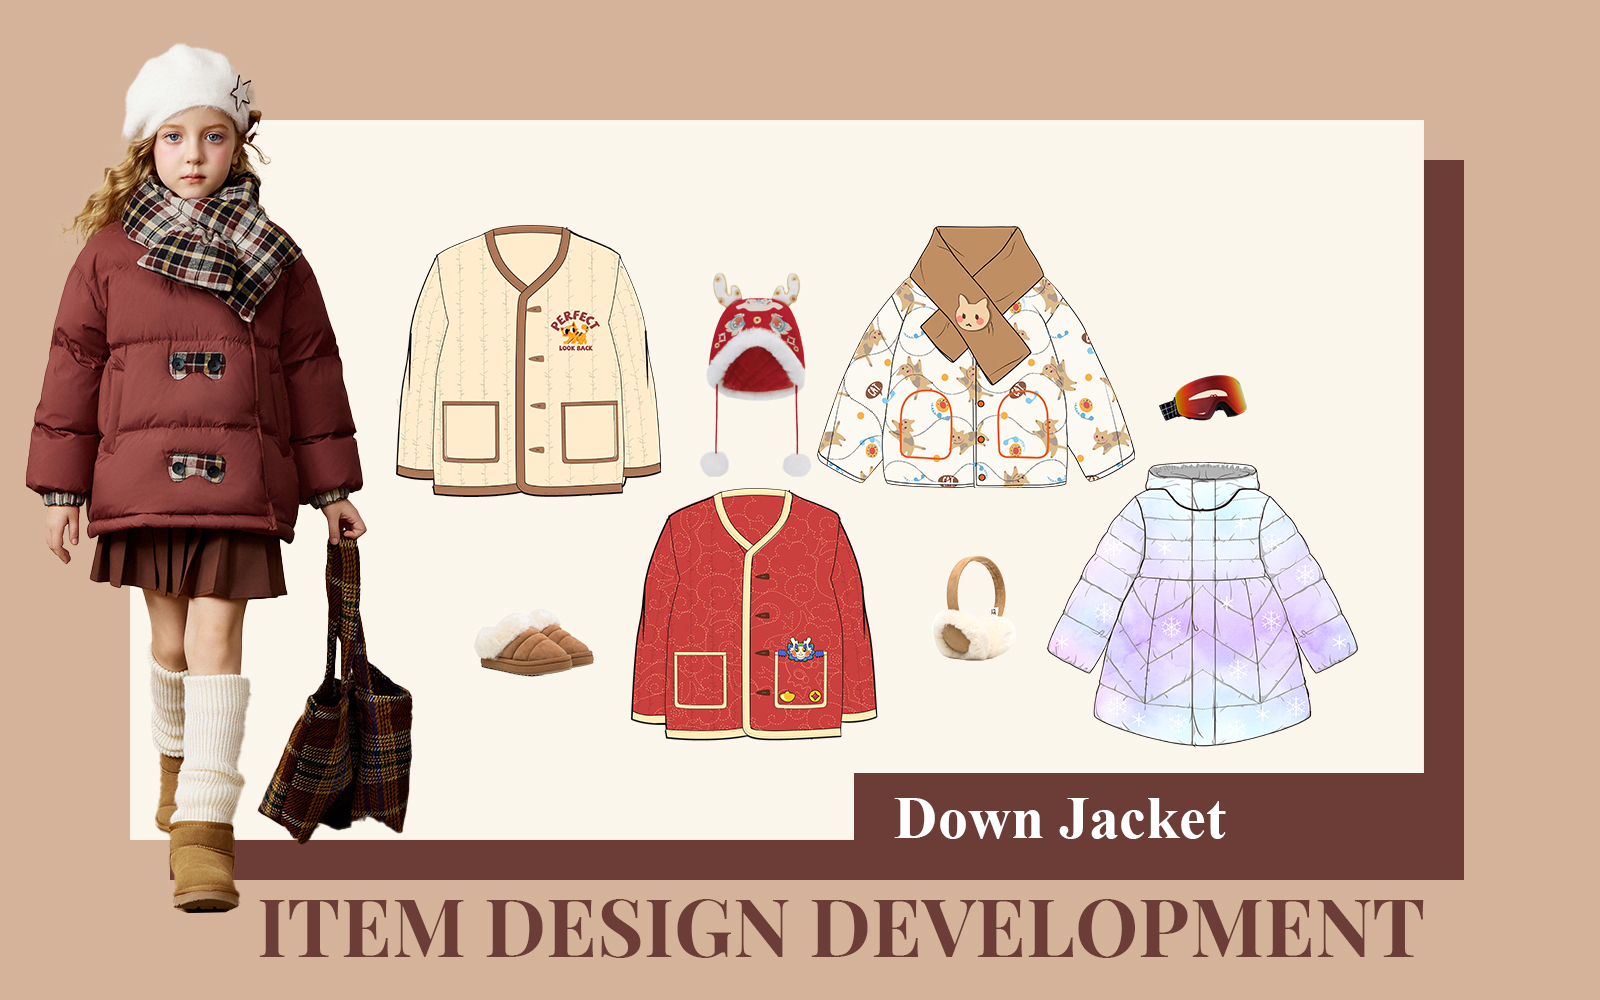 Down Jacket -- The Design Development of Girlswear